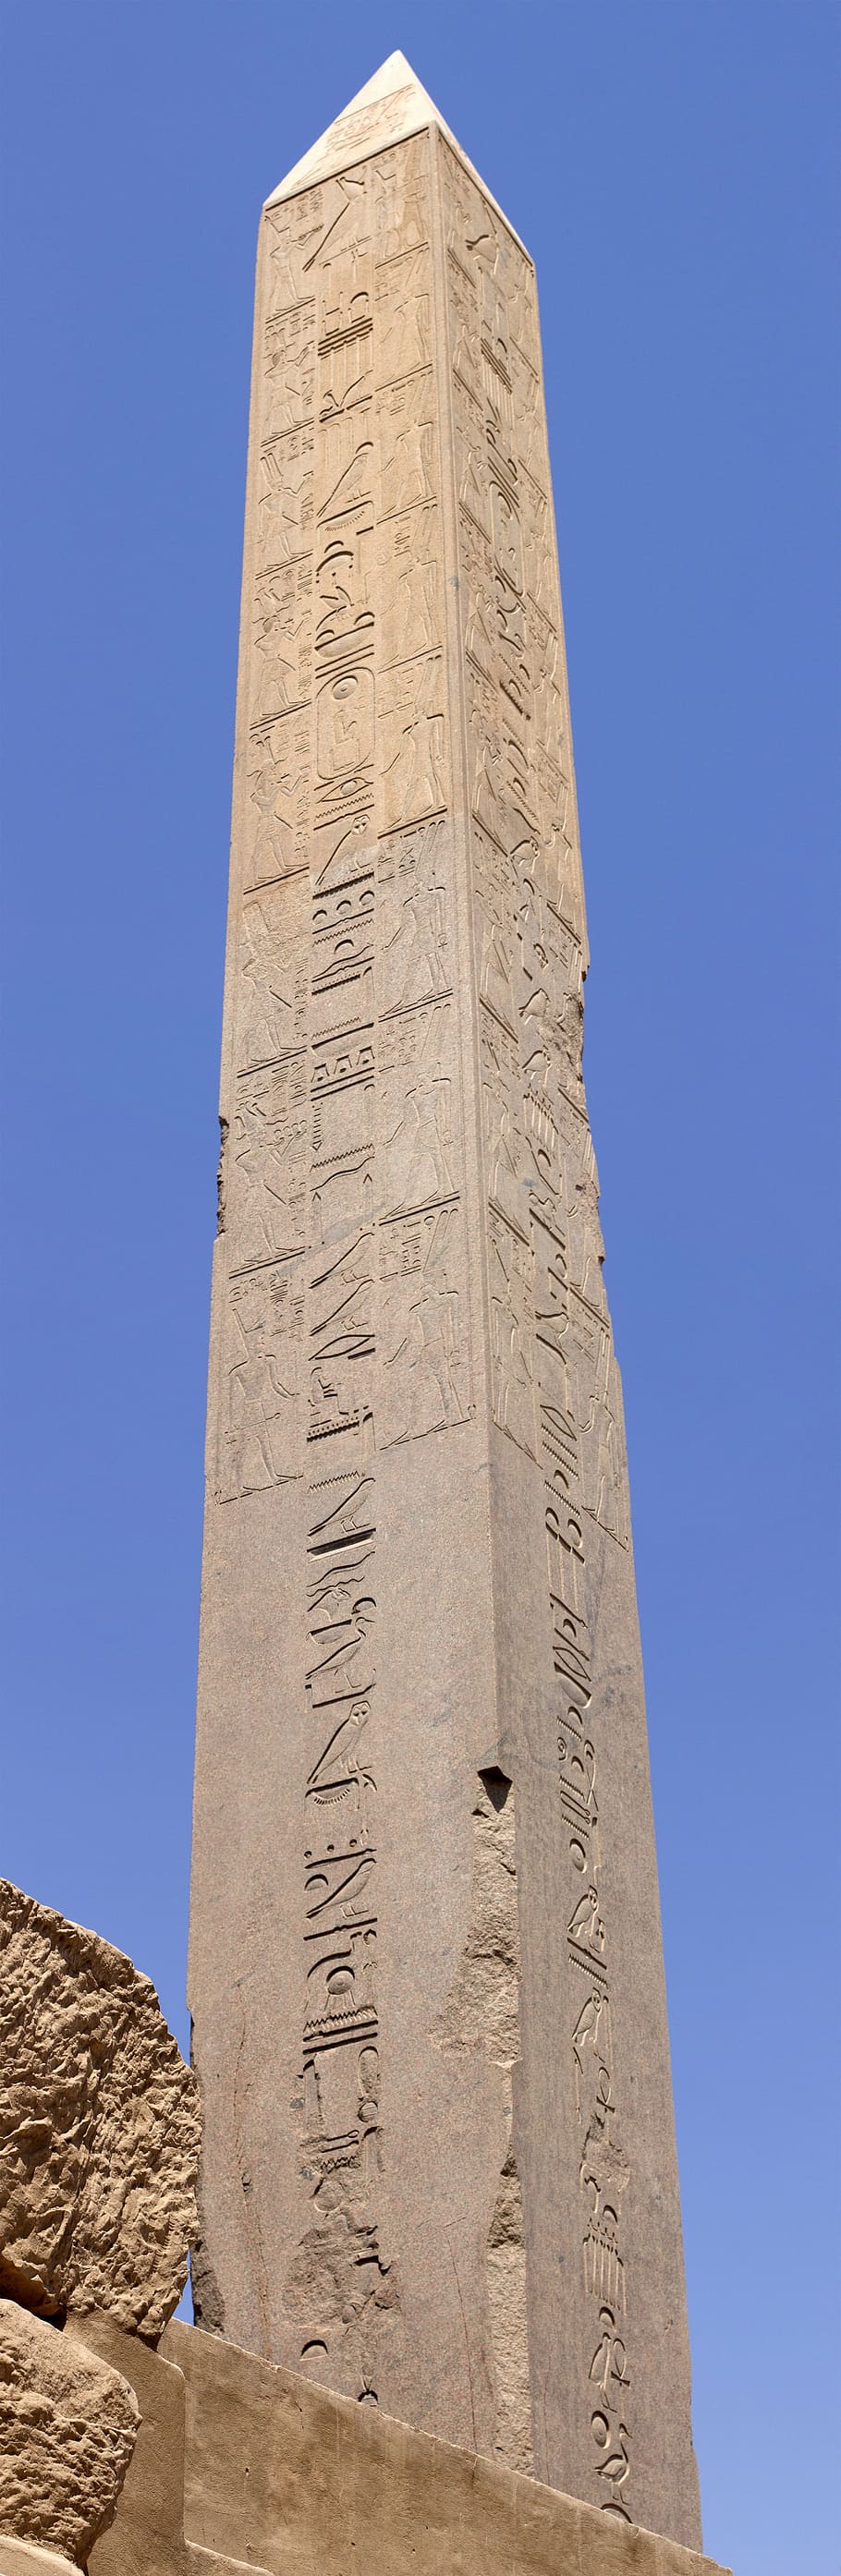 obelisk, karnak, temple, nile, luxor, egypt, culture, ancient times, mythology, architecture